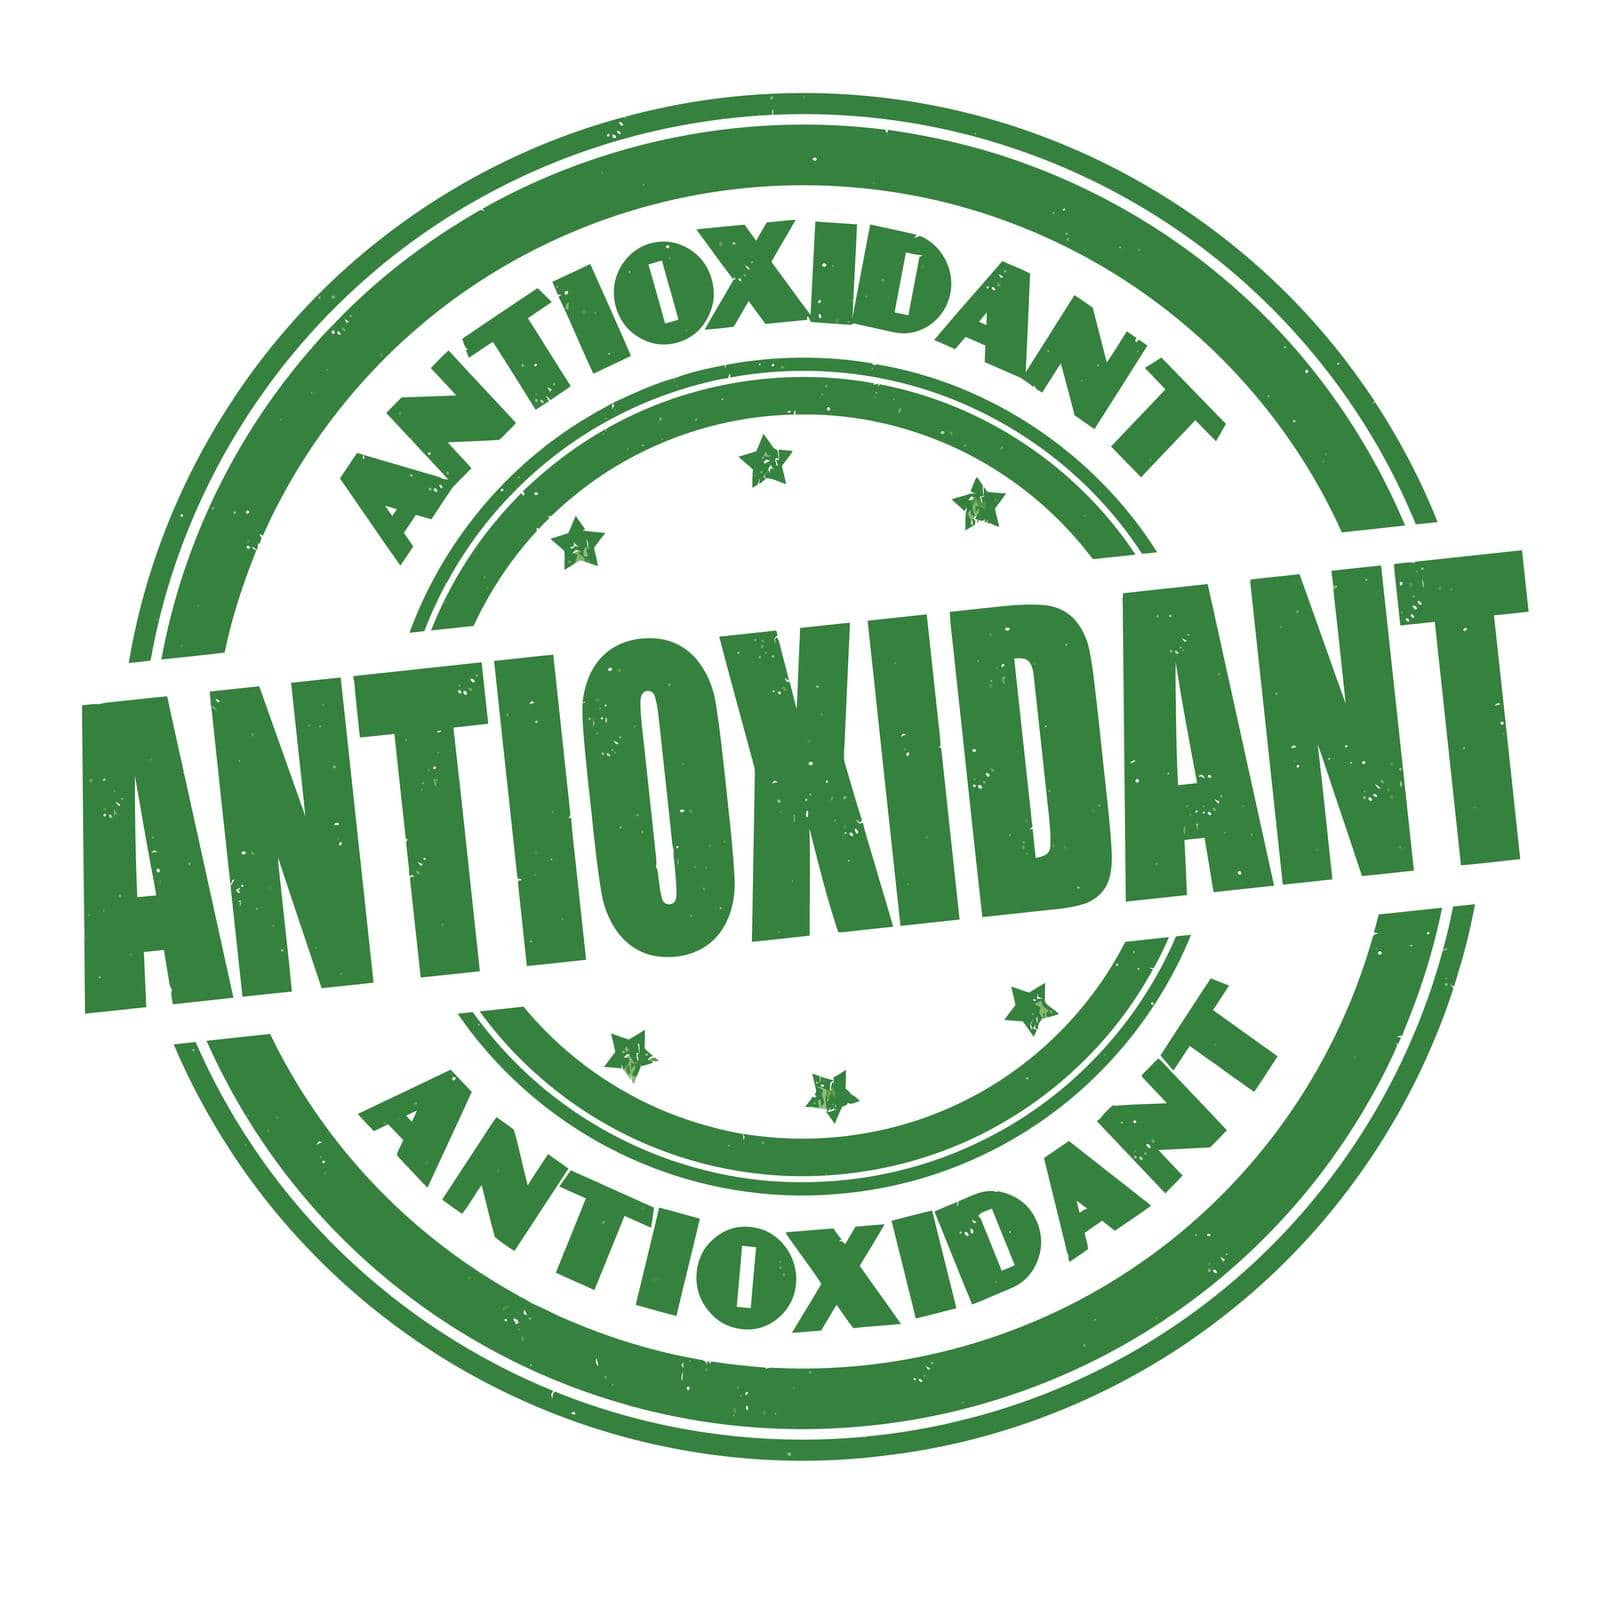 Antioxidant grunge rubber stamp on white background, vector illustration